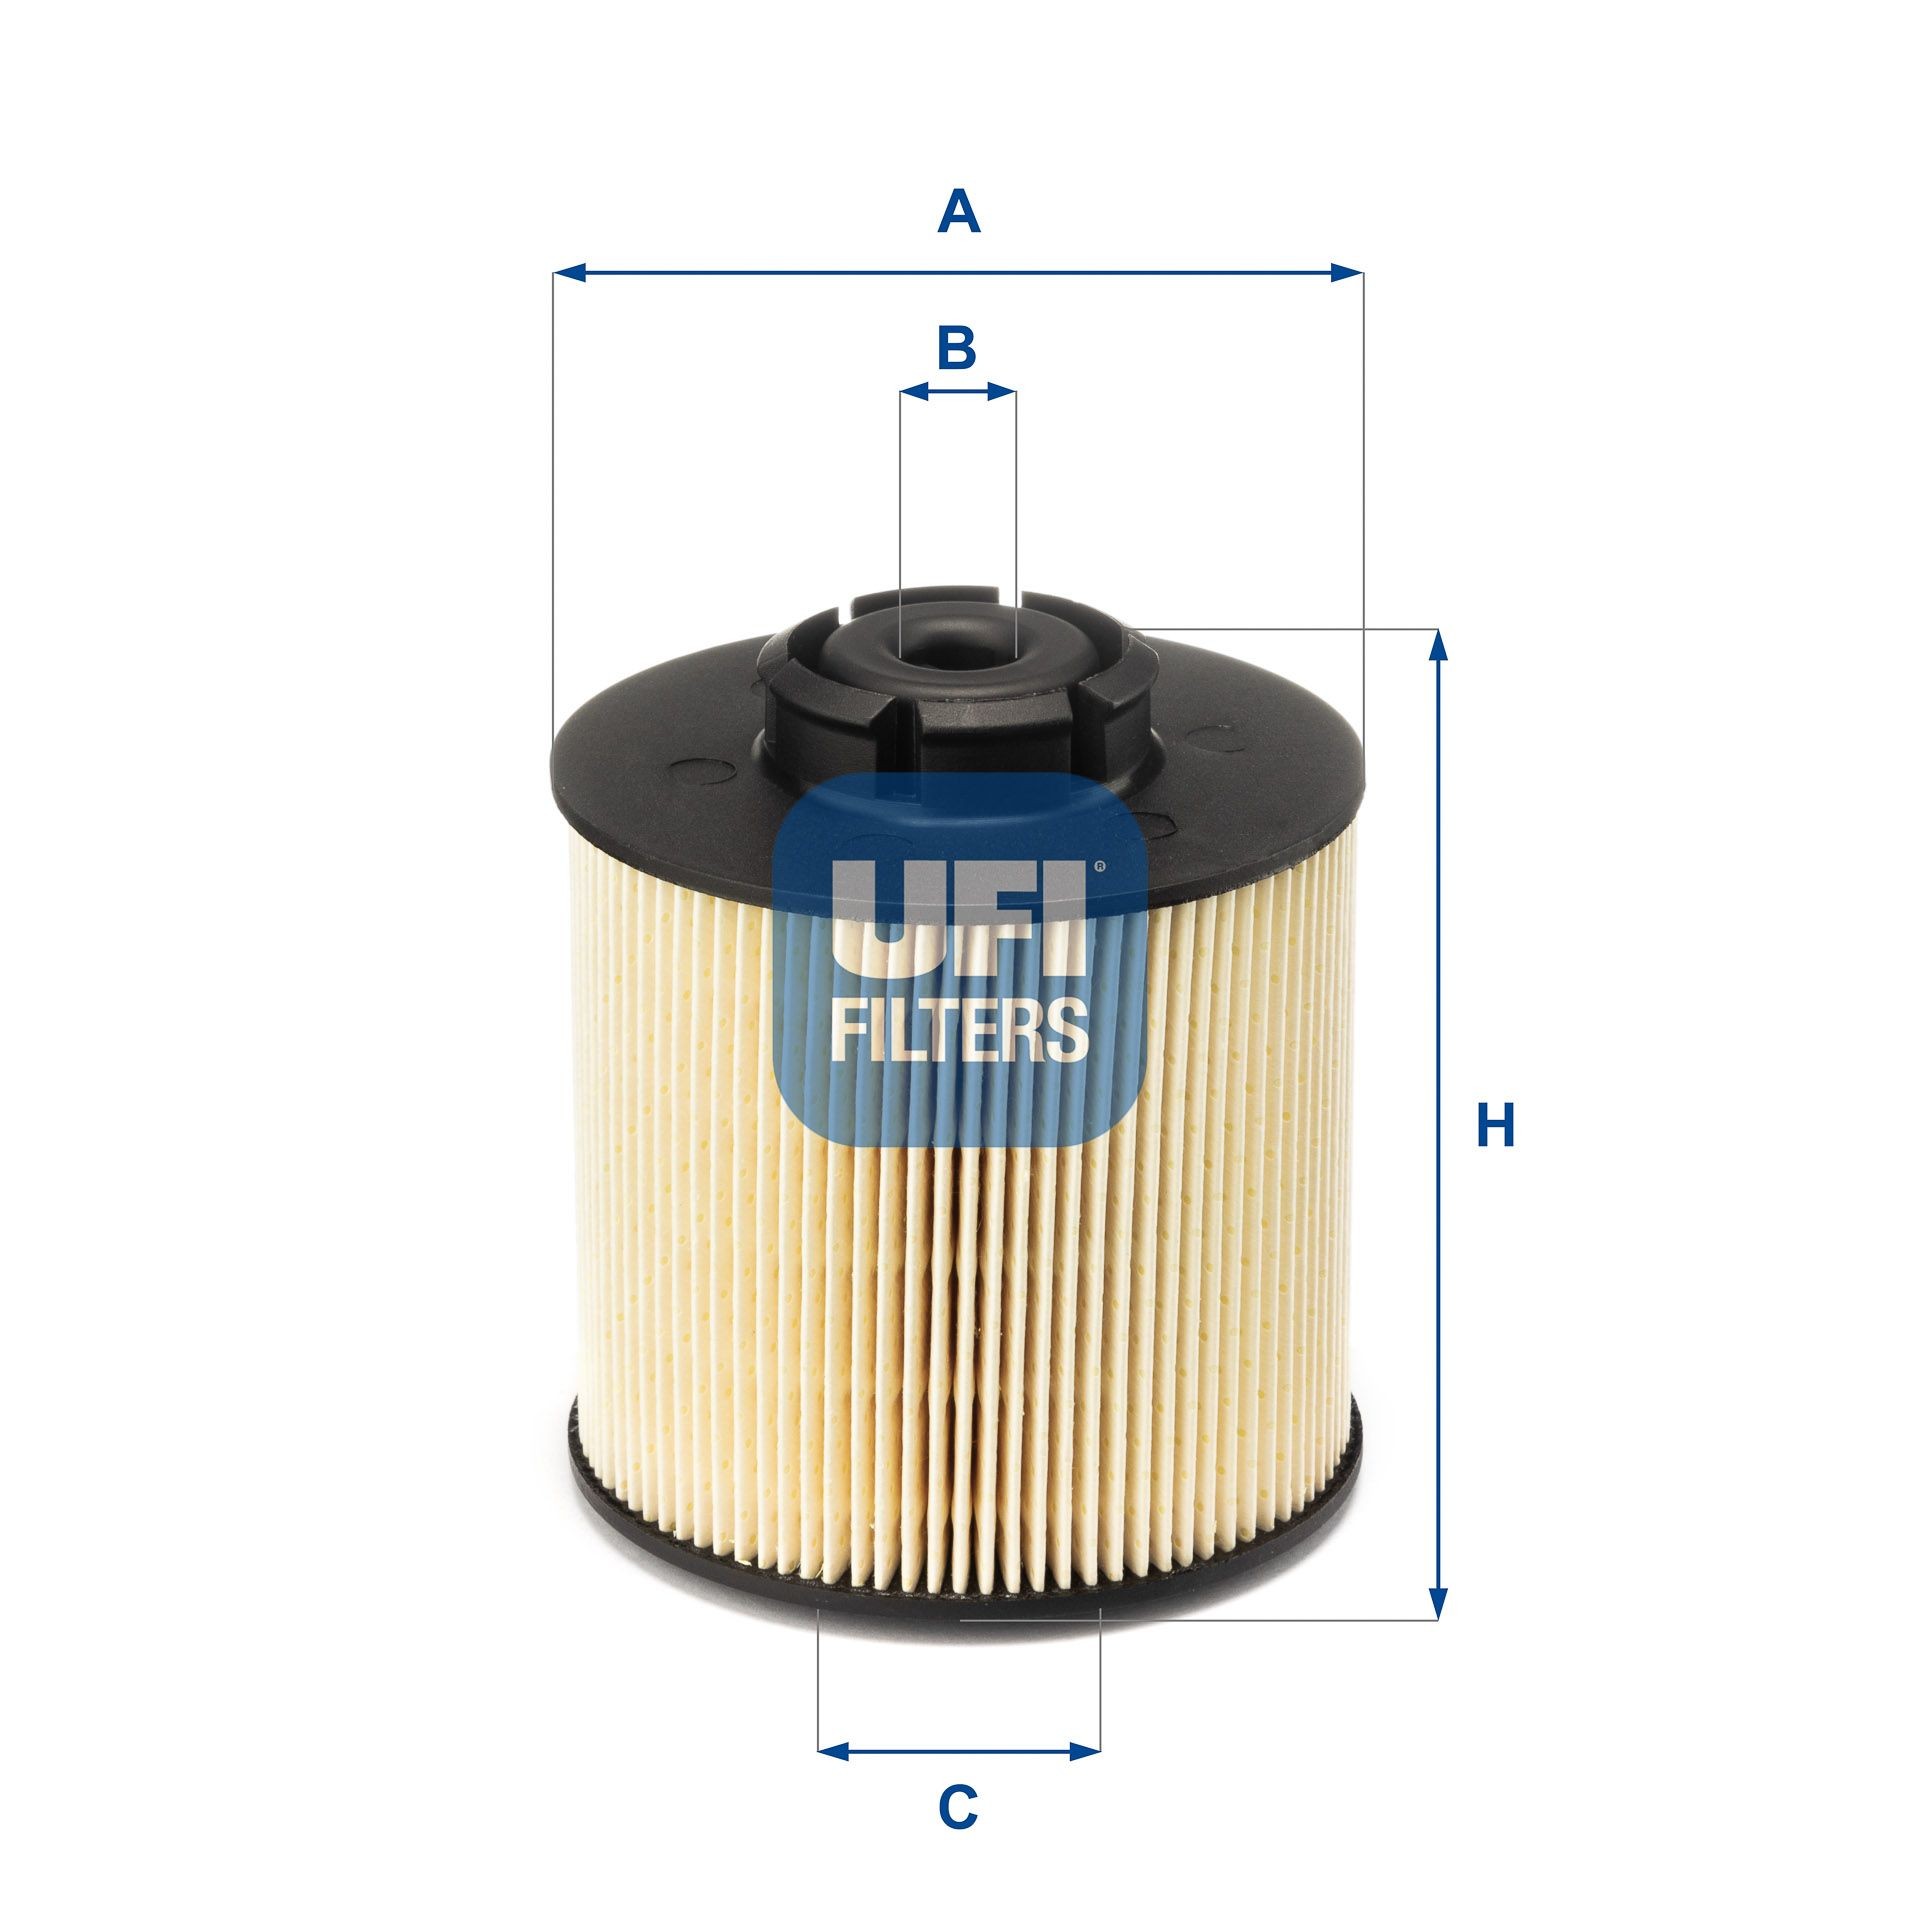 UFI 26.017.00 Fuel filter A 000 090 15 51